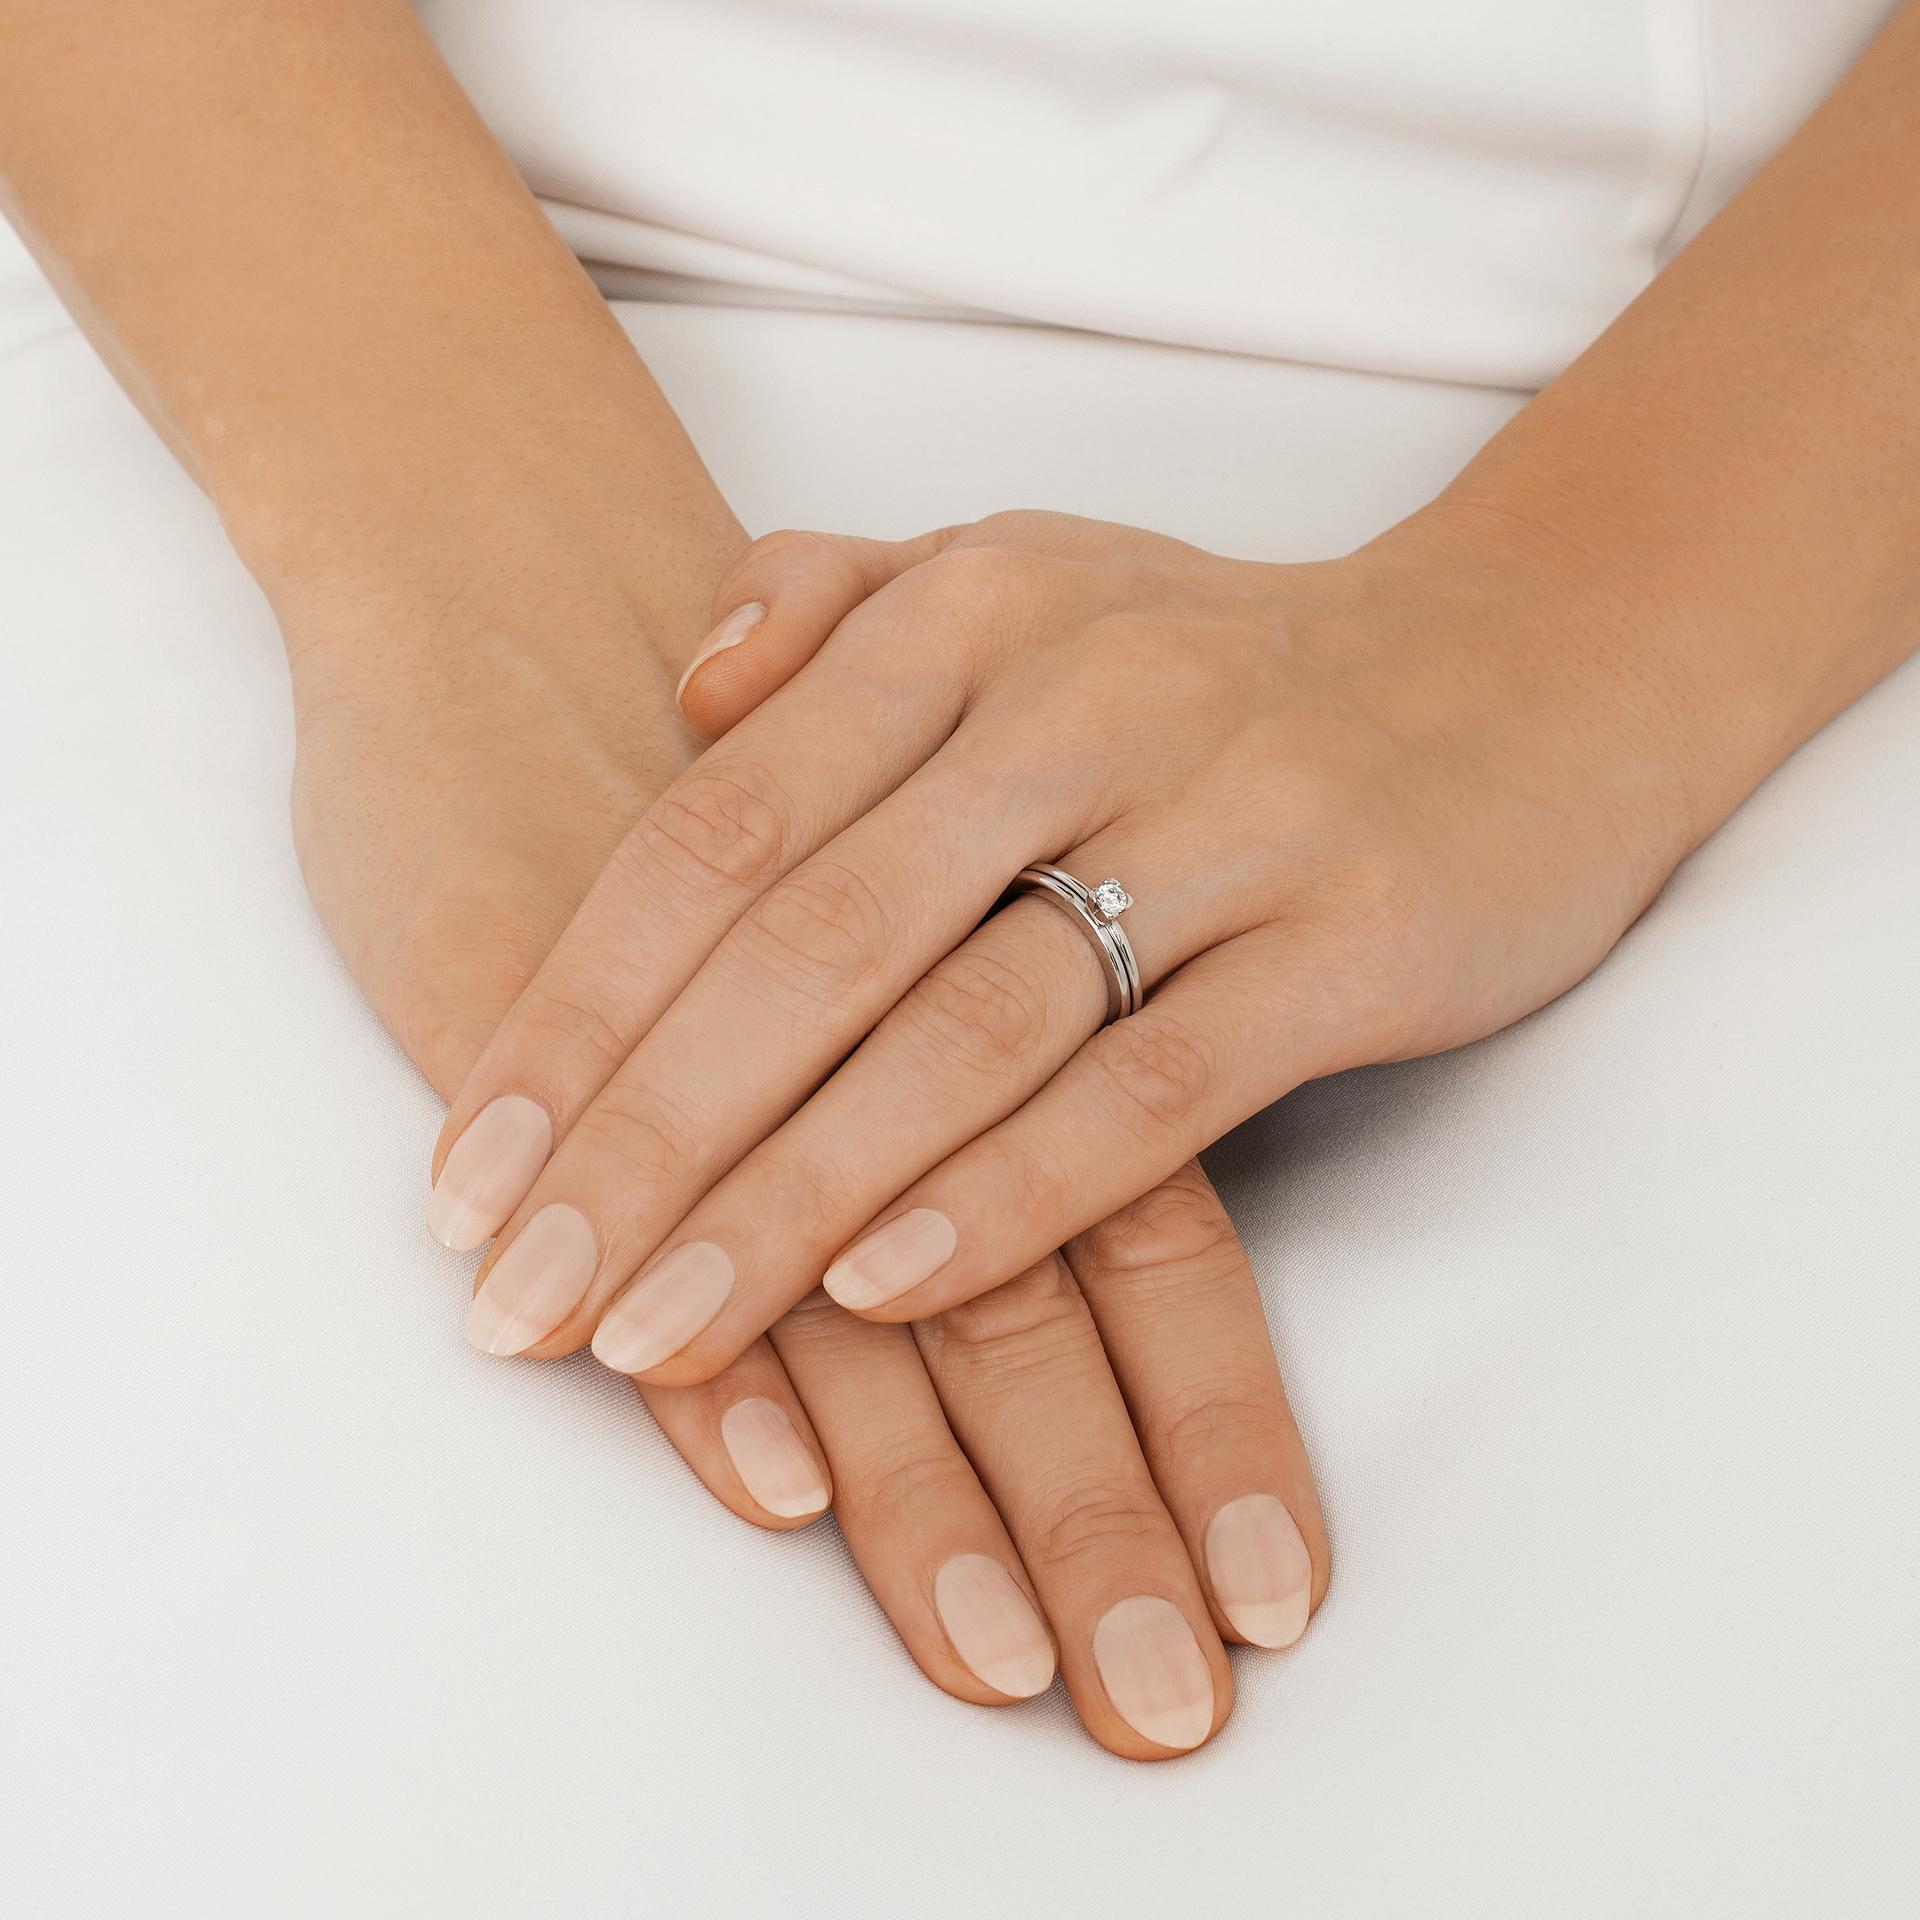 Love Bead Wedding Ring 0.19 ct